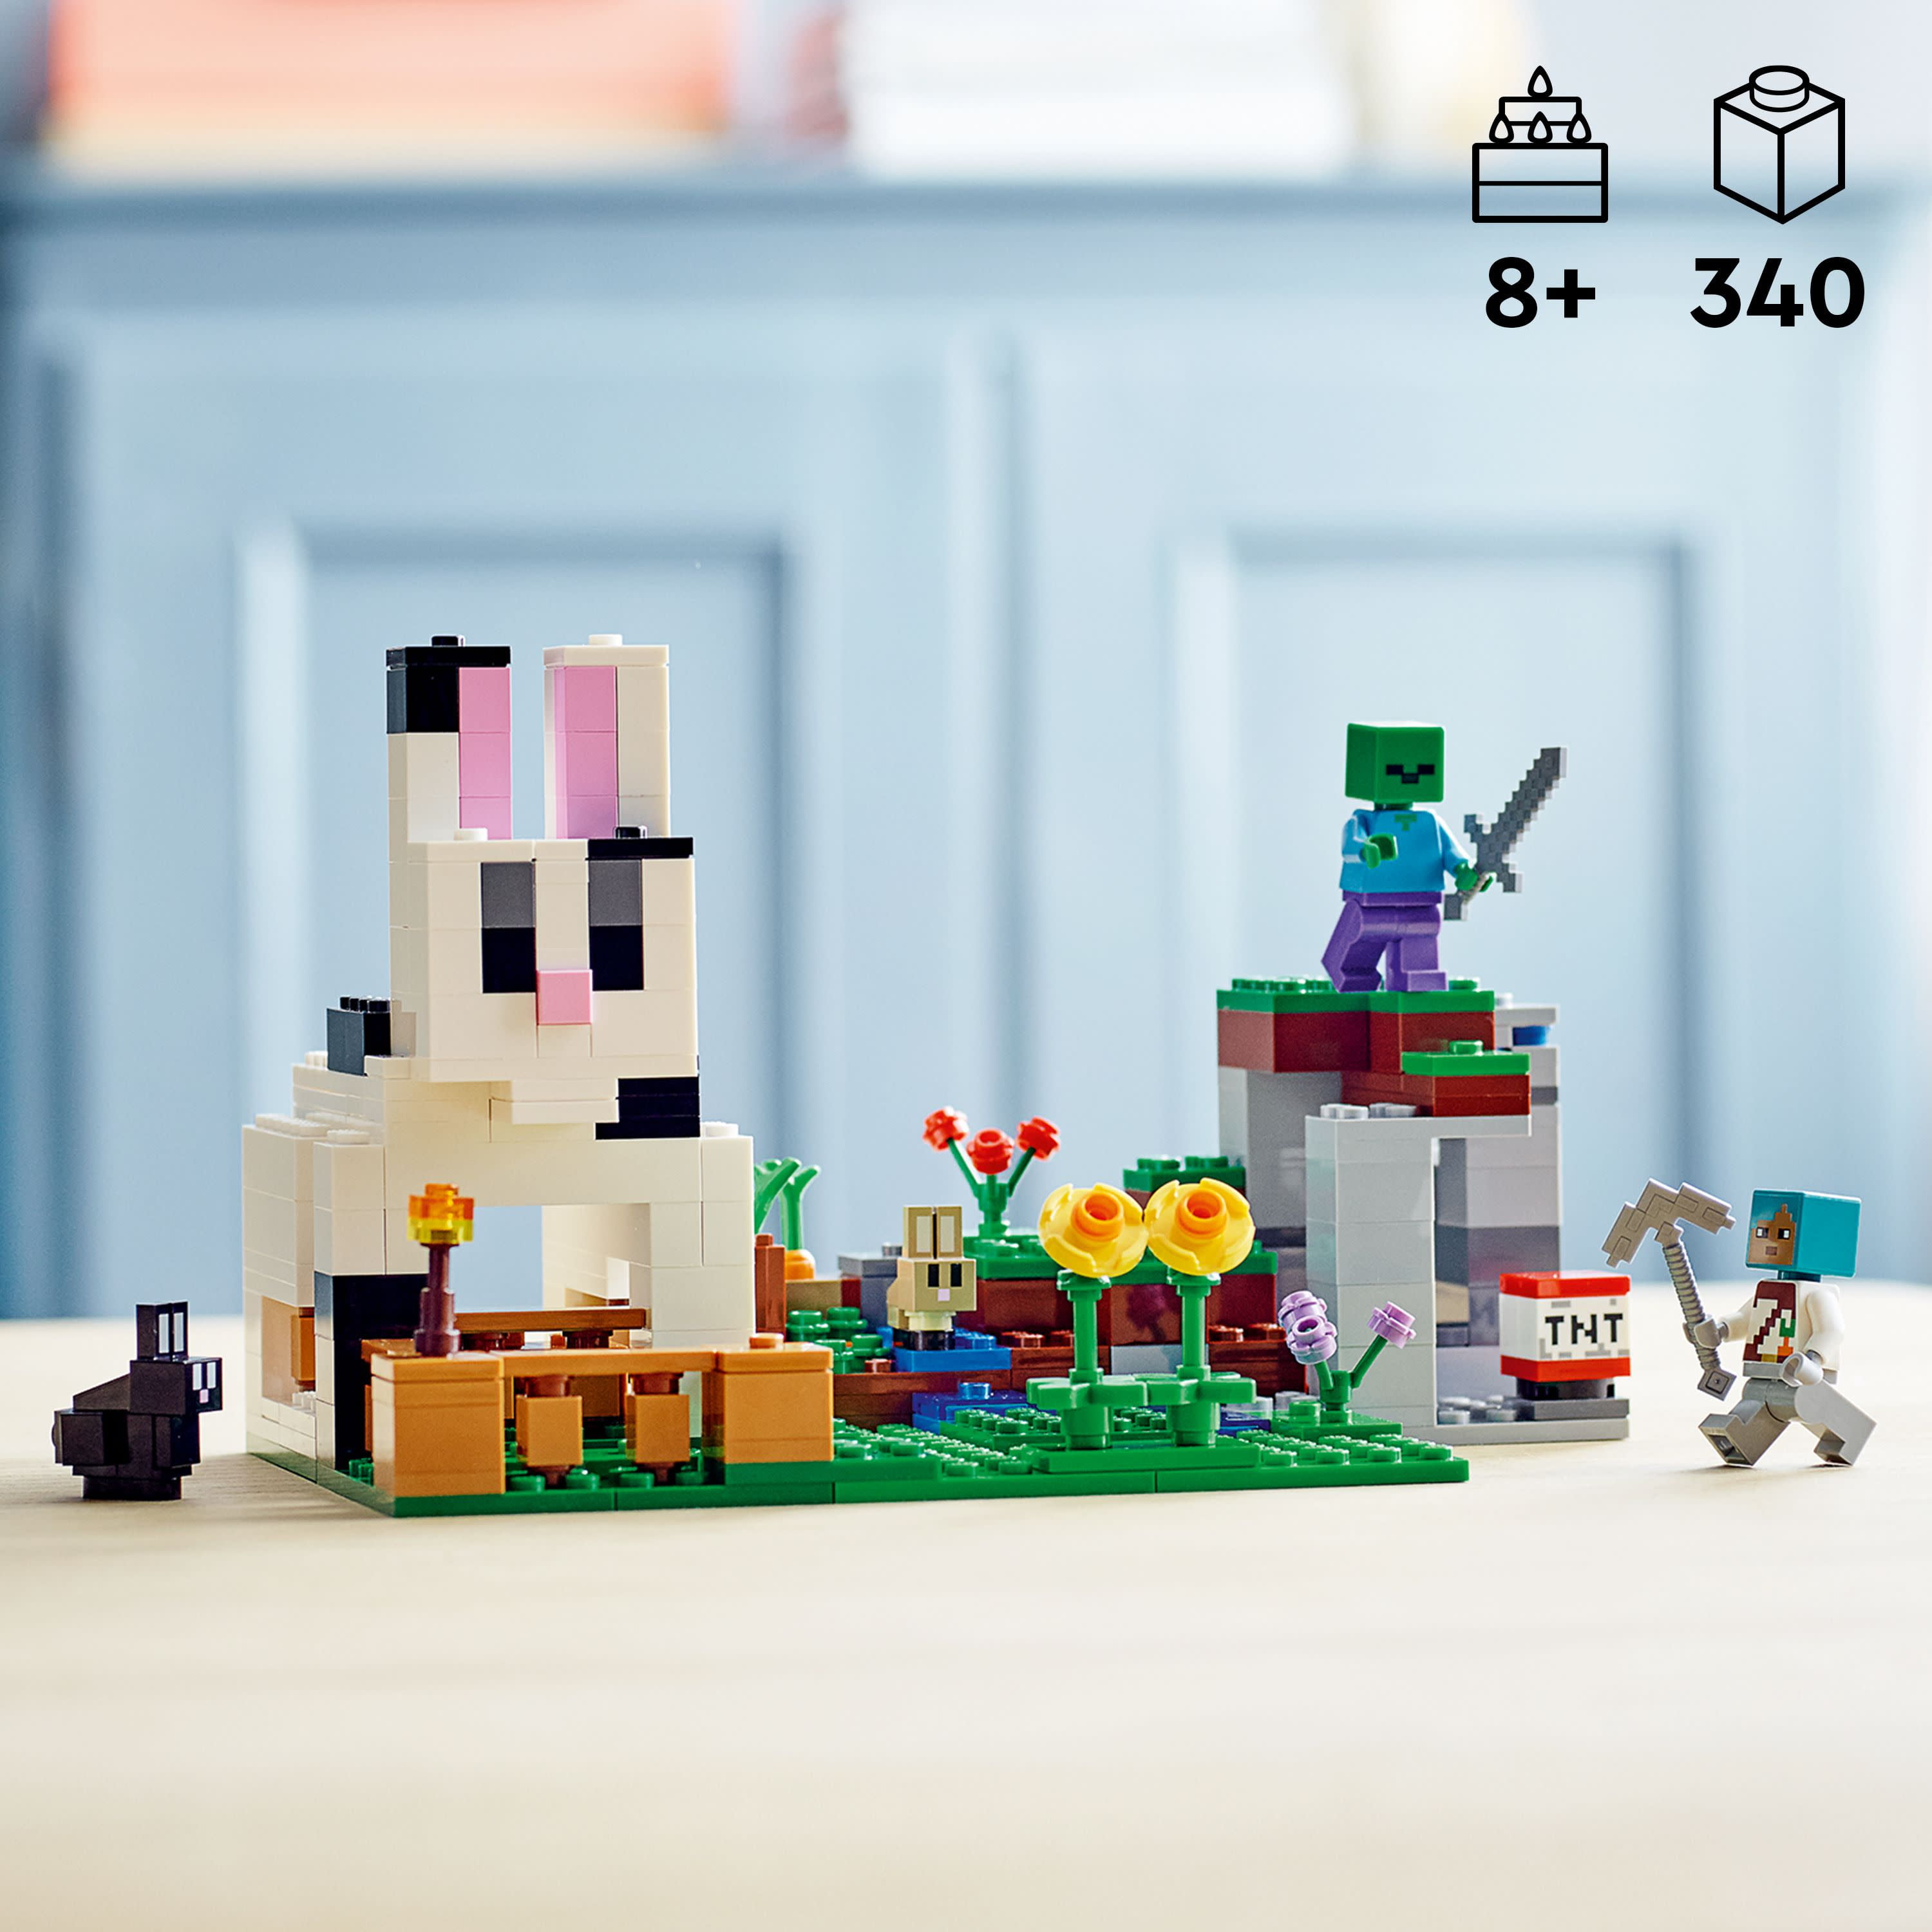 LEGO Minecraft 21181 pas cher, Le ranch lapin